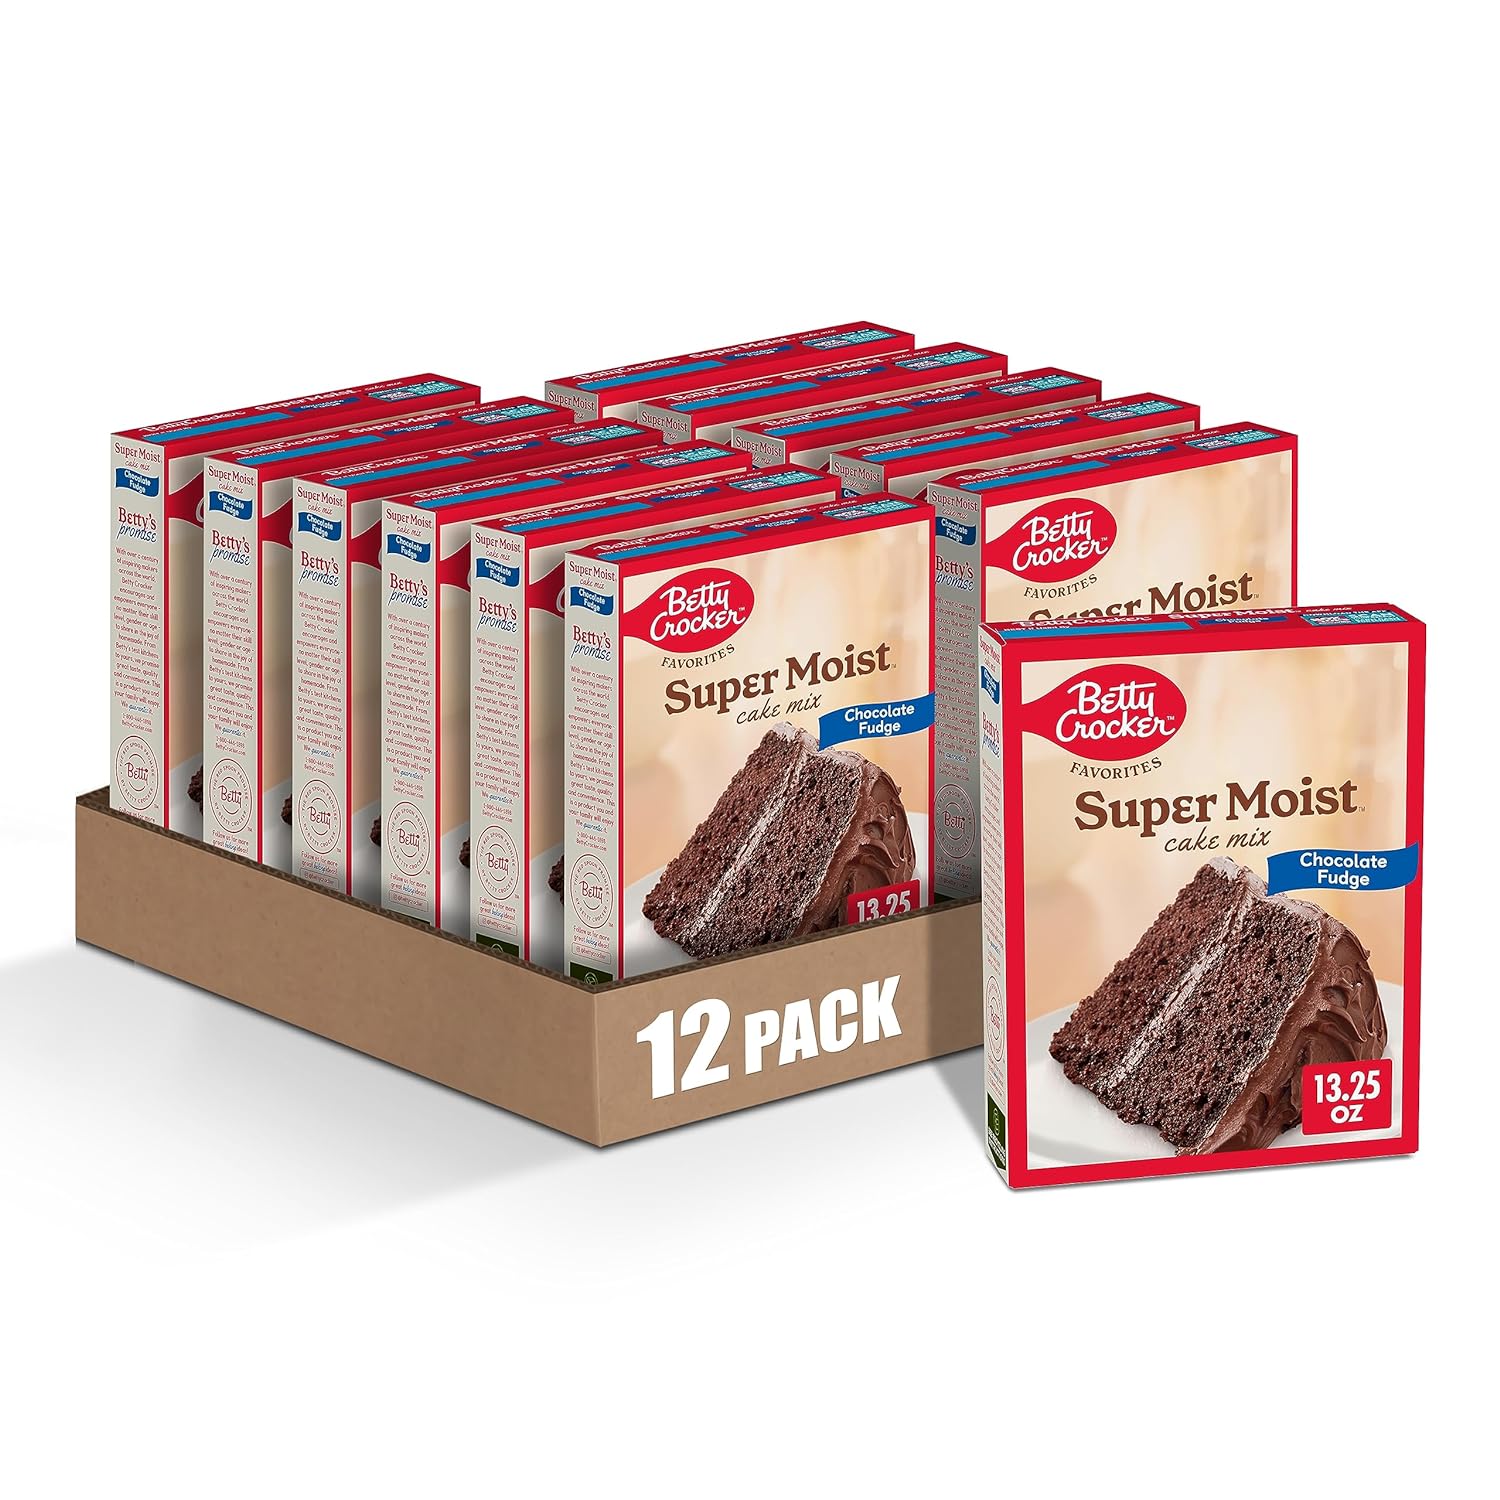 Betty Crocker Favorites Super Moist Chocolate Fudge Cake Mix, 13.25 oz (Pack of 12)